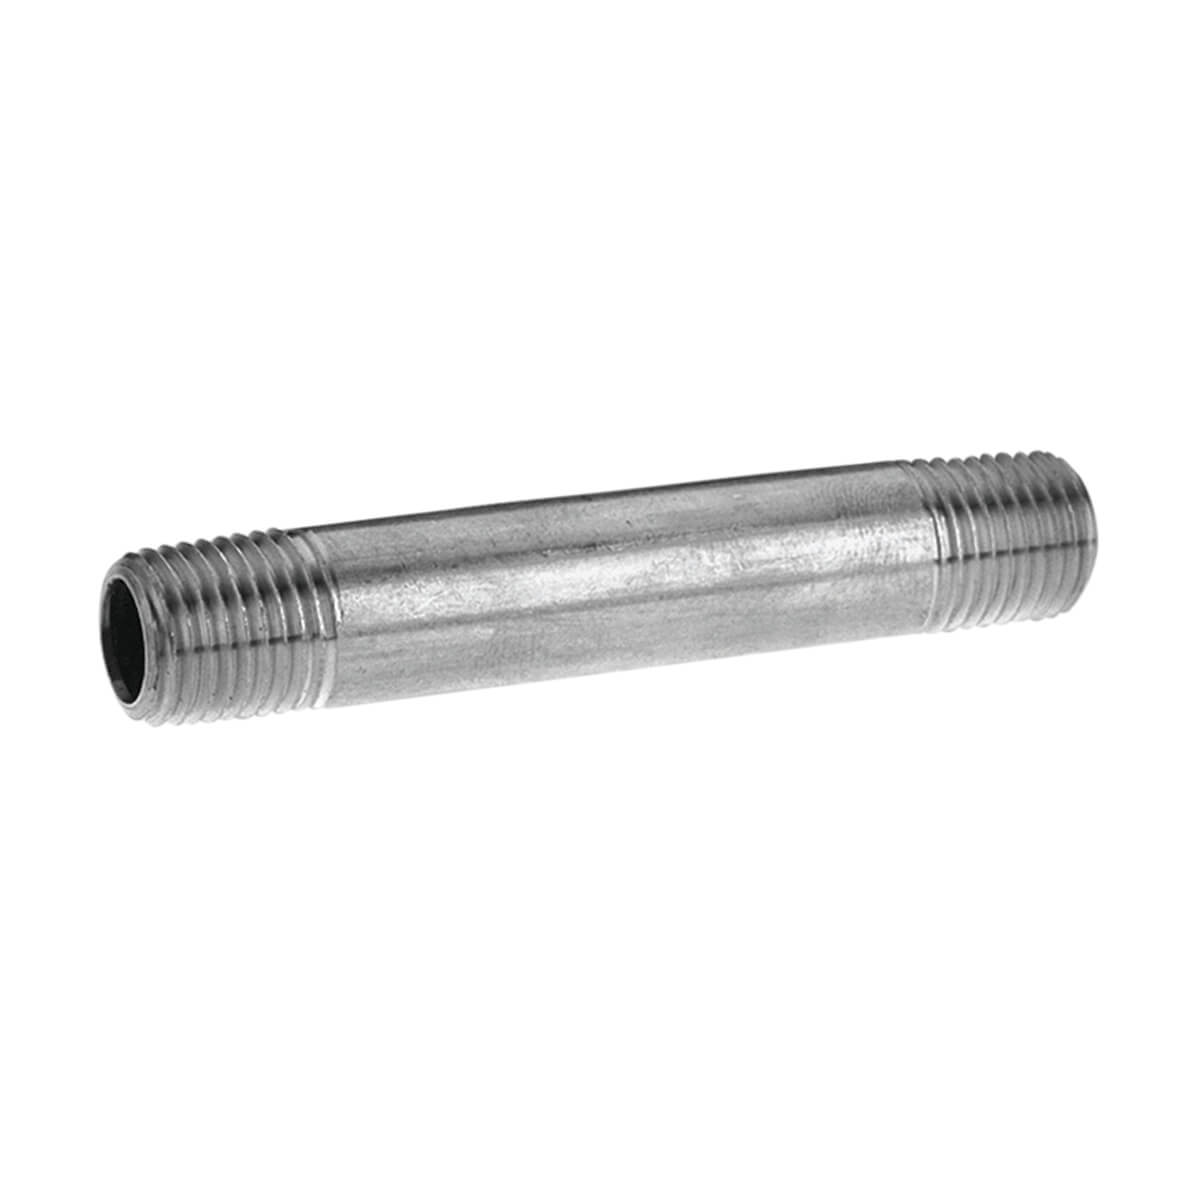 Pipe Nipple Galvanized Steel - 1-1/4-in x 6-in